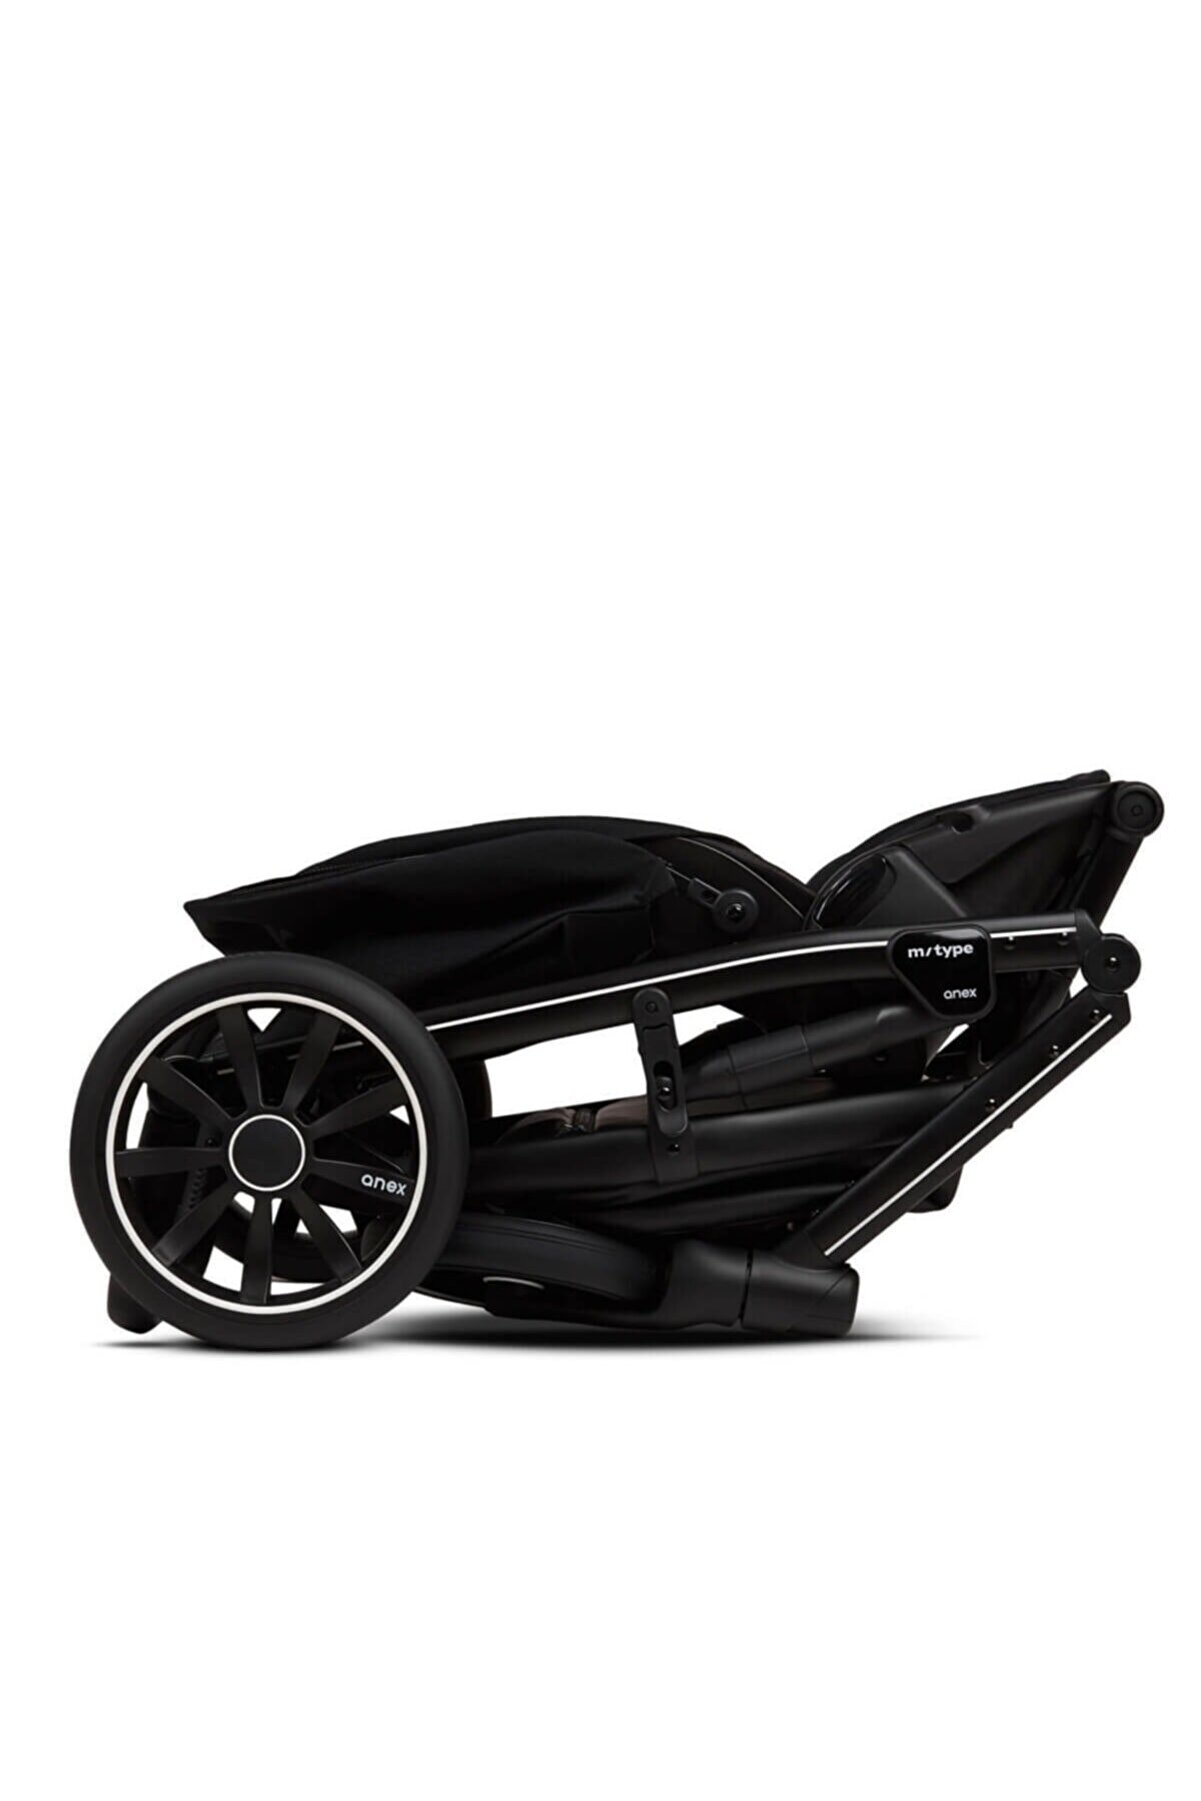 Anex ® M/type Bebek Arabası - Siyah